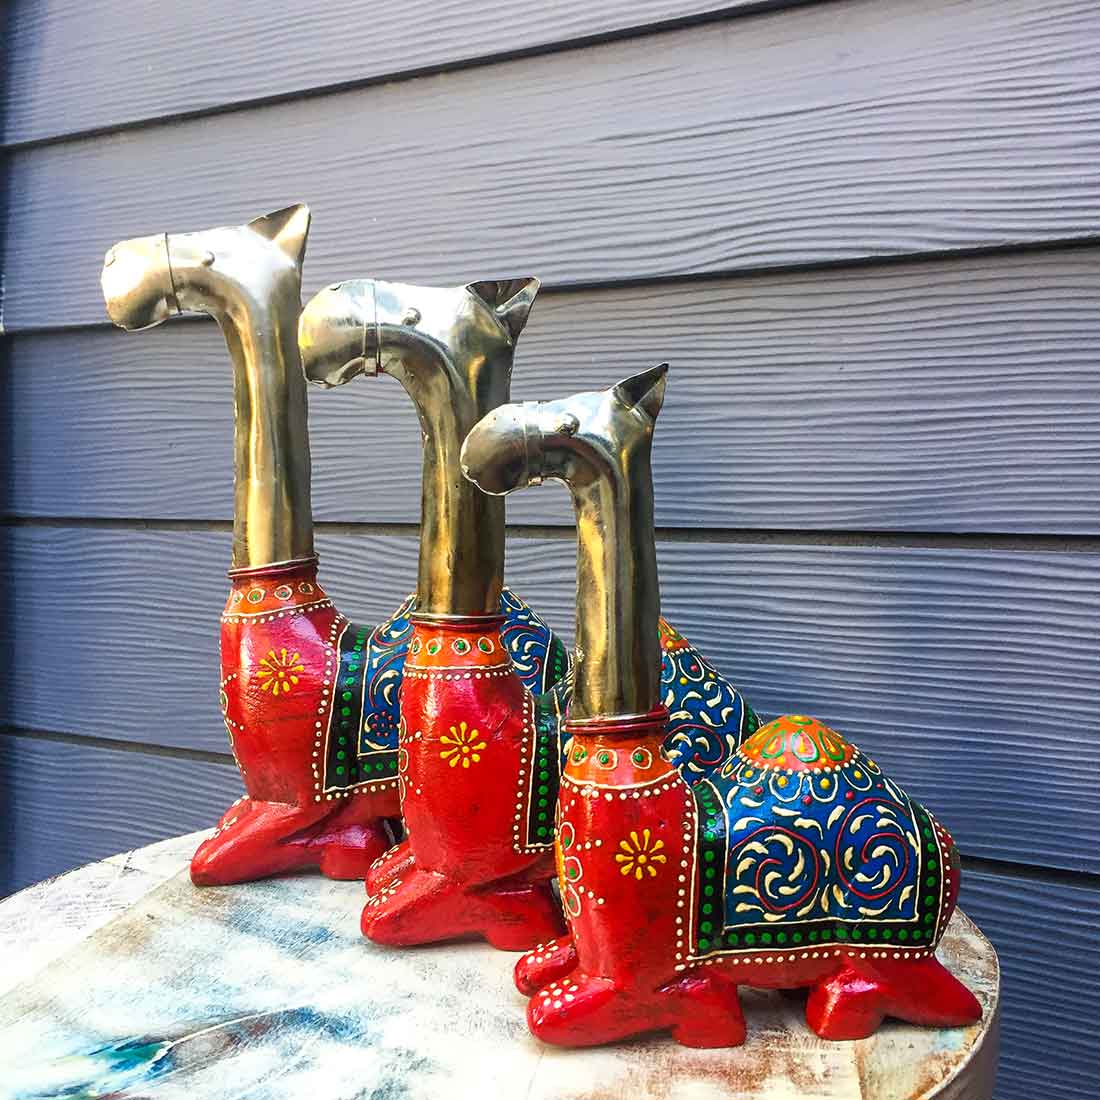 Camel Decorative Showpiece - For Table Decor & Gifts -11 Inch -Set of 3 - ApkaMart